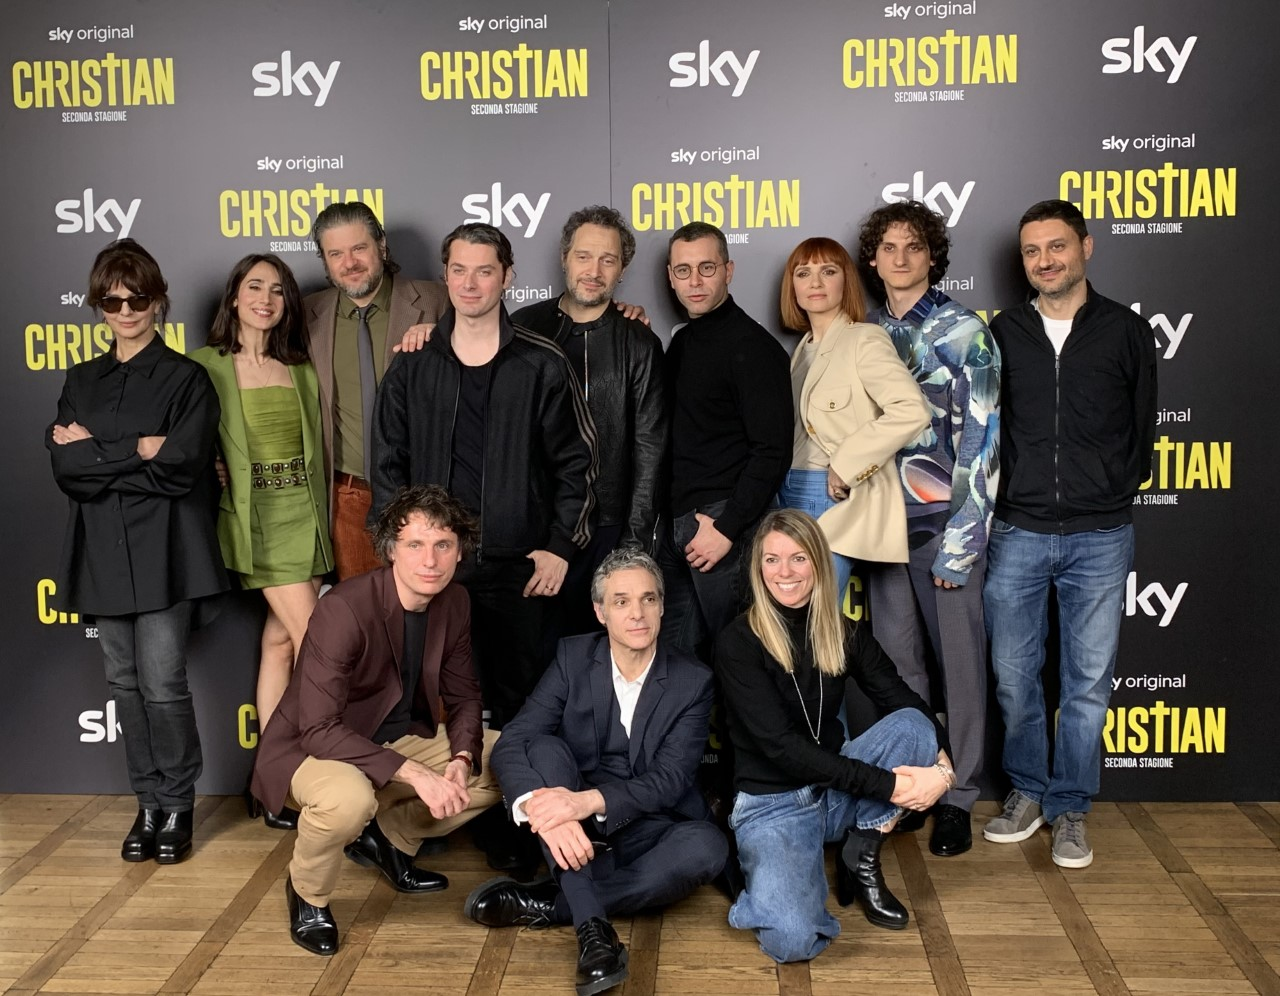 “Christian” returns to Sky with Edoardo Pesce and Claudio Santamaria